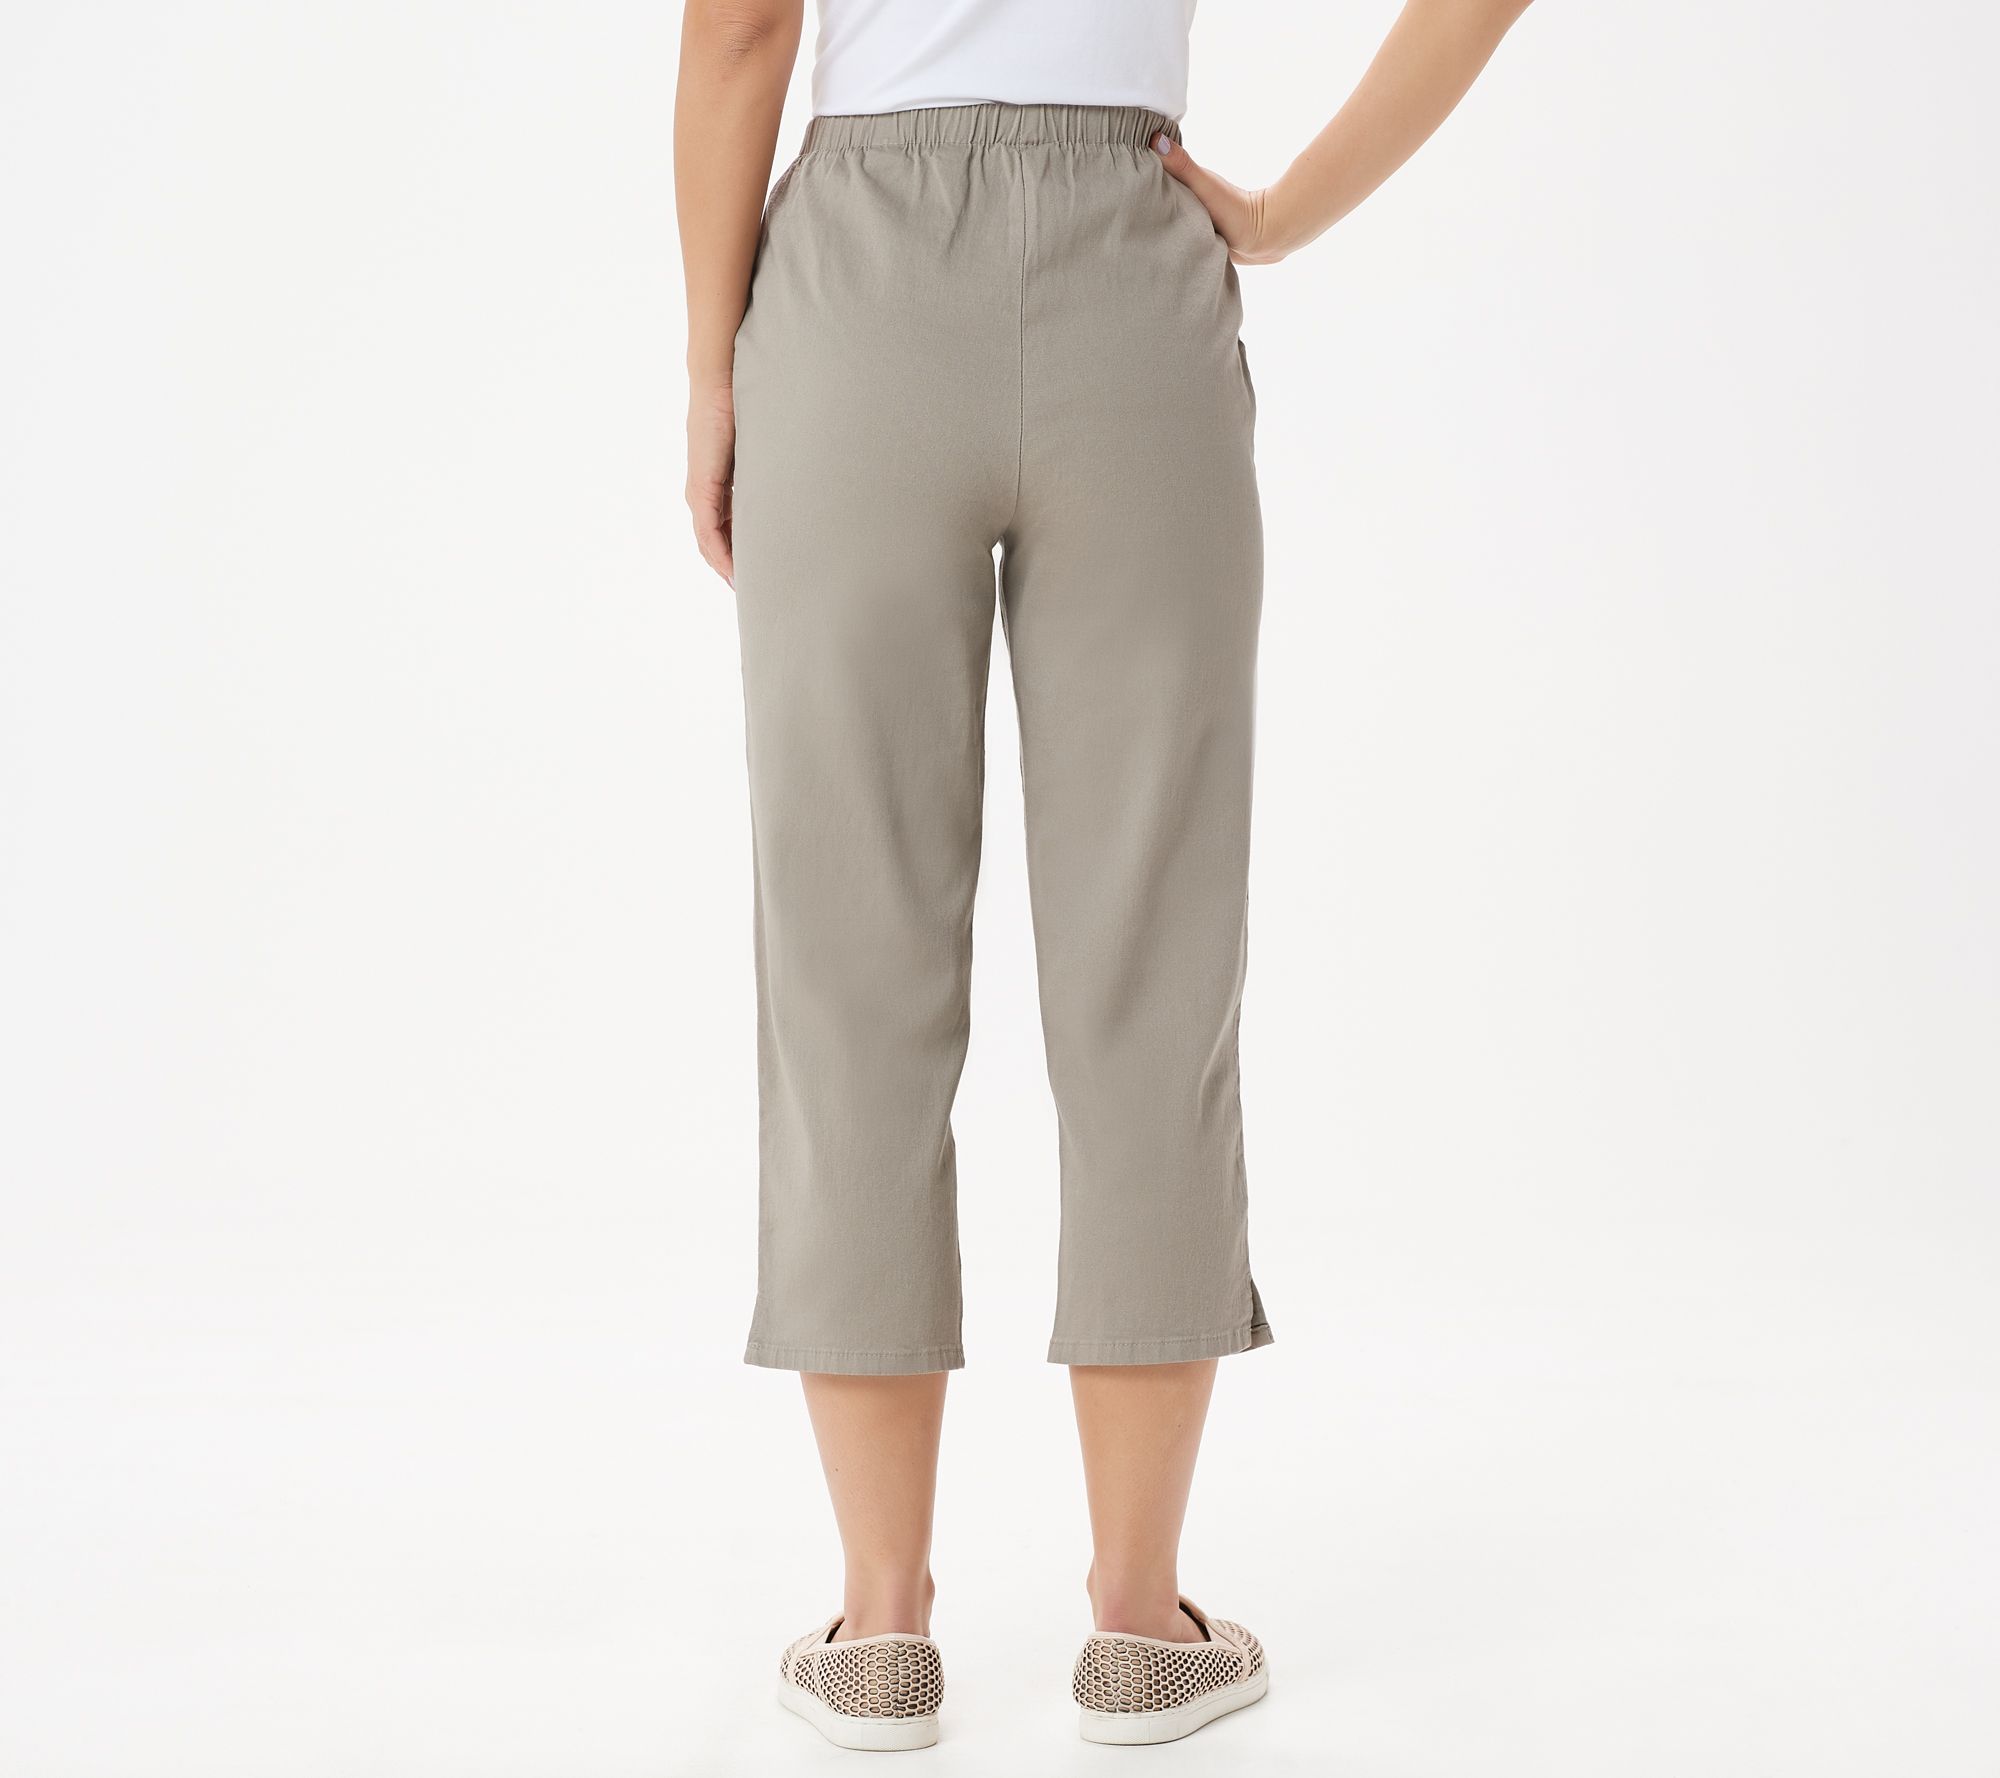 Denim & Co. Original Waist Stretch Crop Pants with Side Pockets - QVC.com